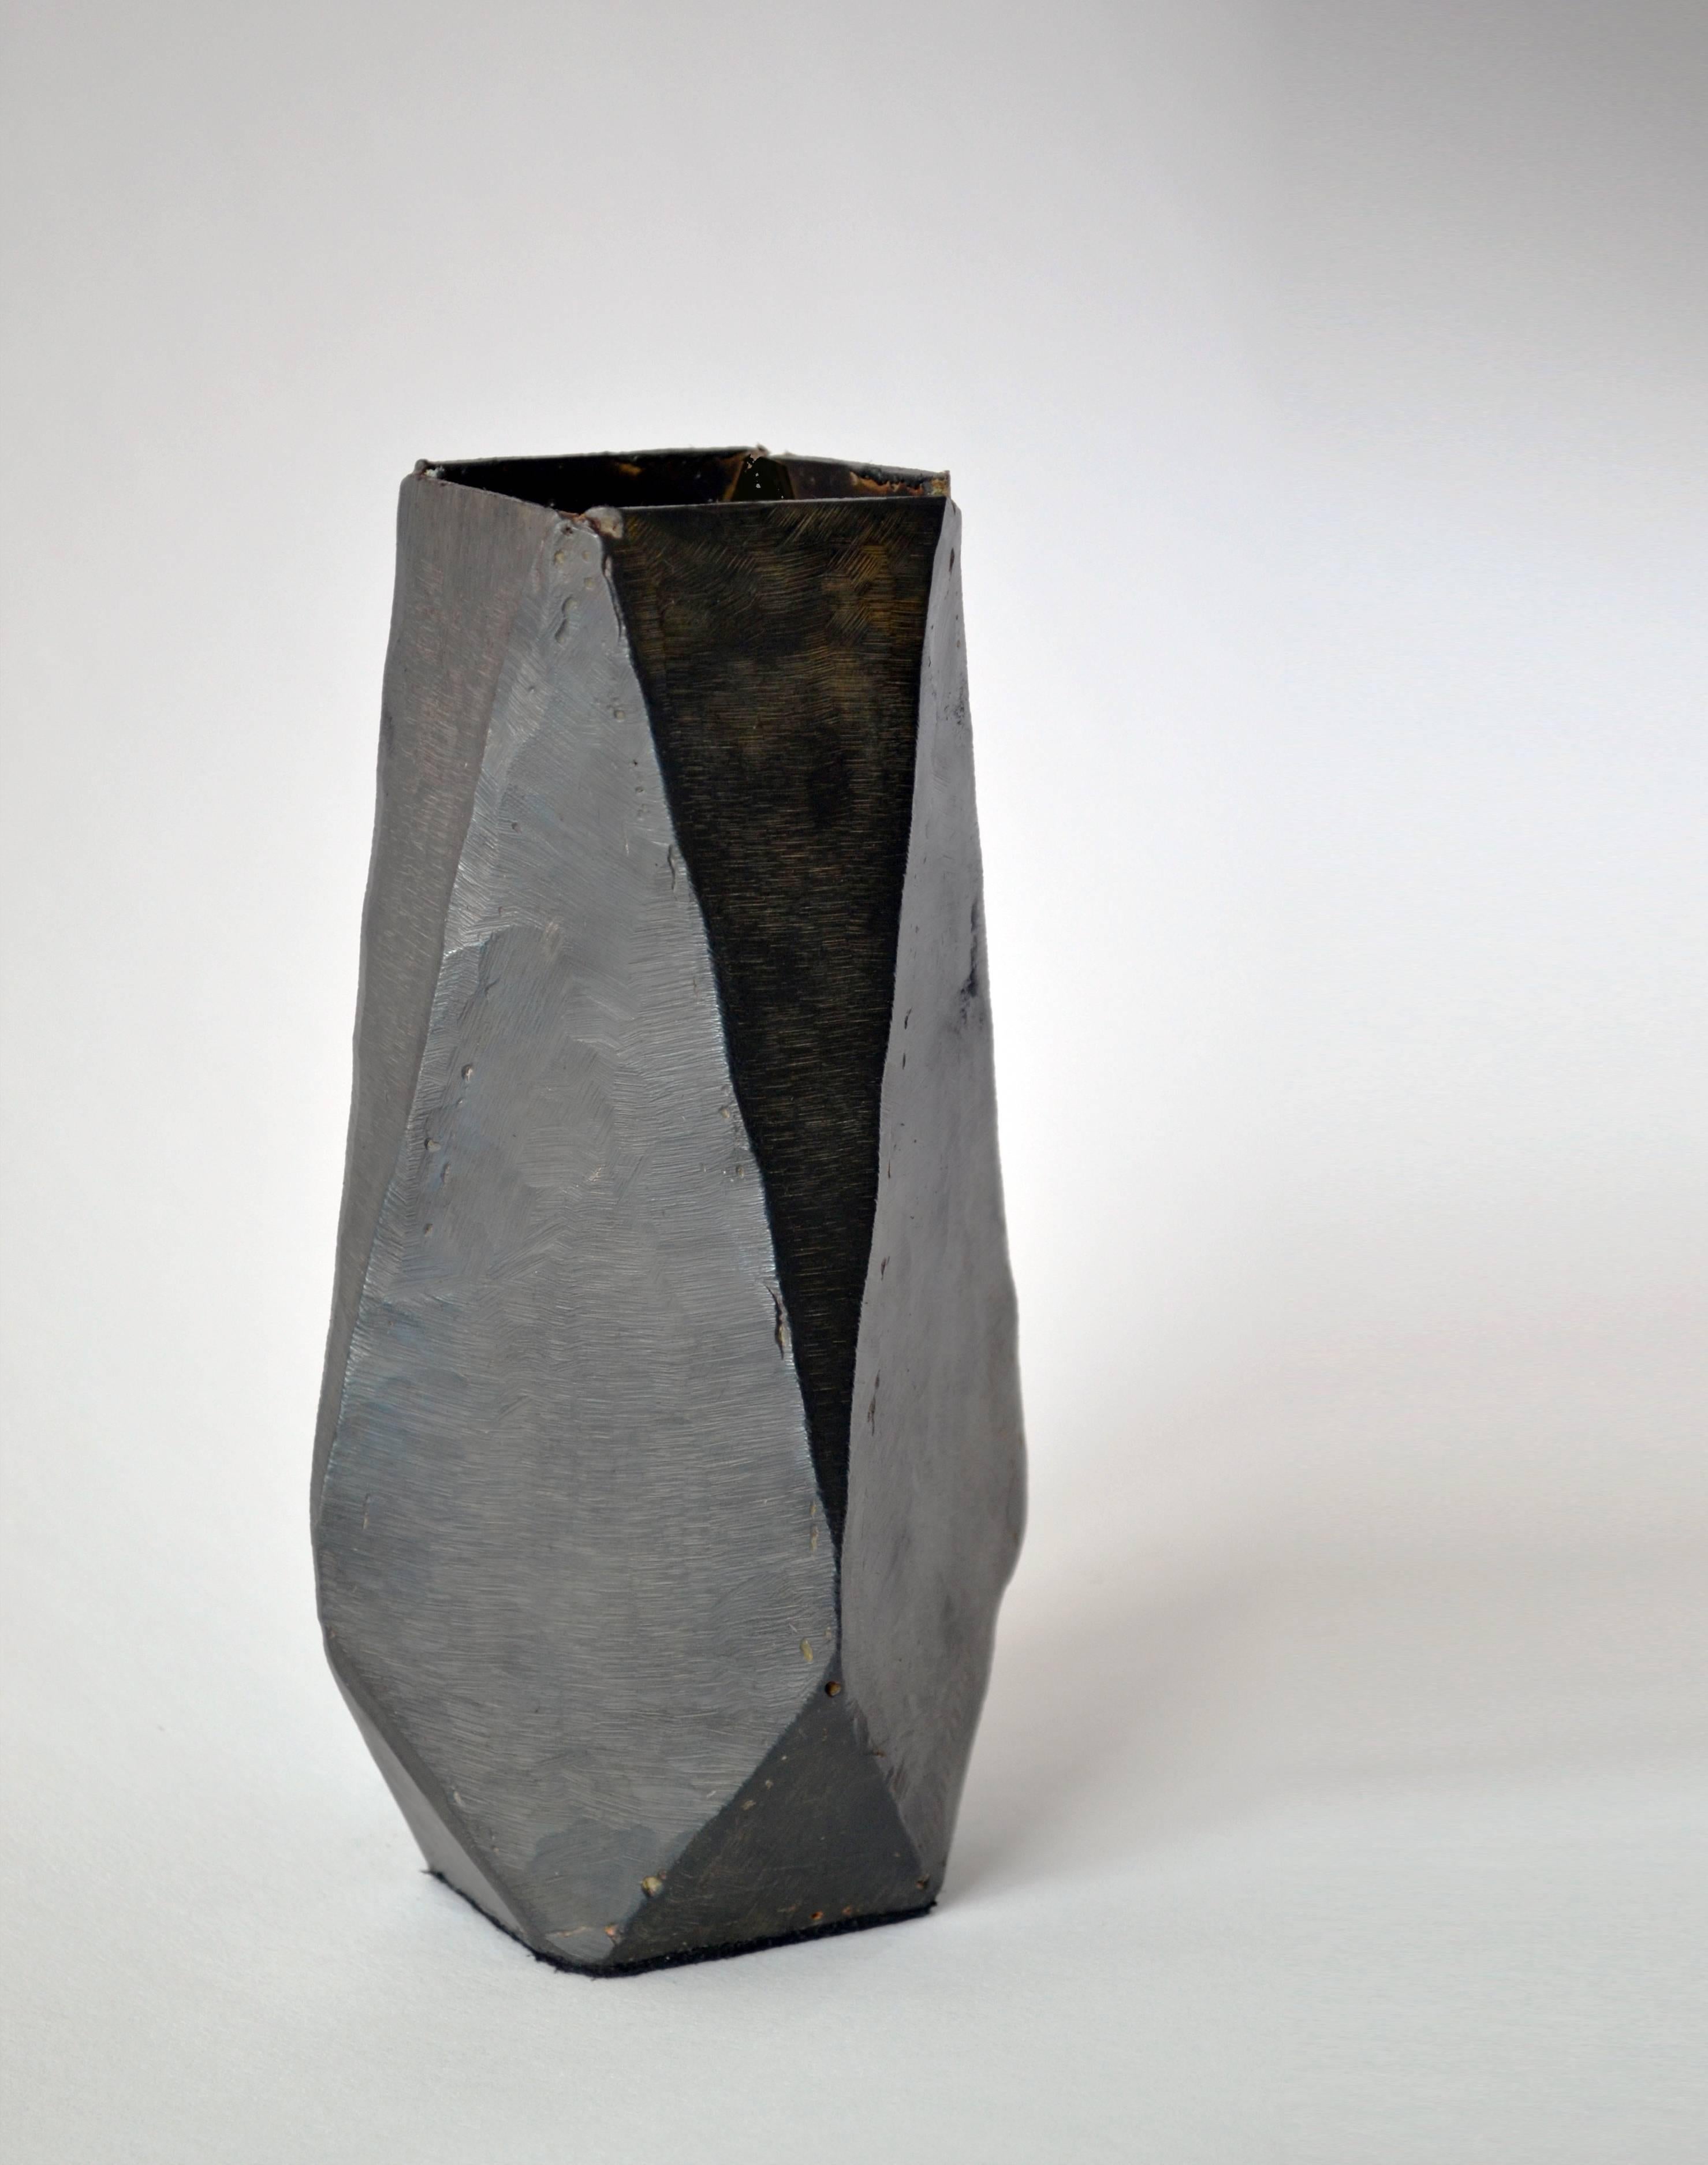 Collection of Modern Geometric Vessels Handmade by J.M. Szymanski, made in NYC 1